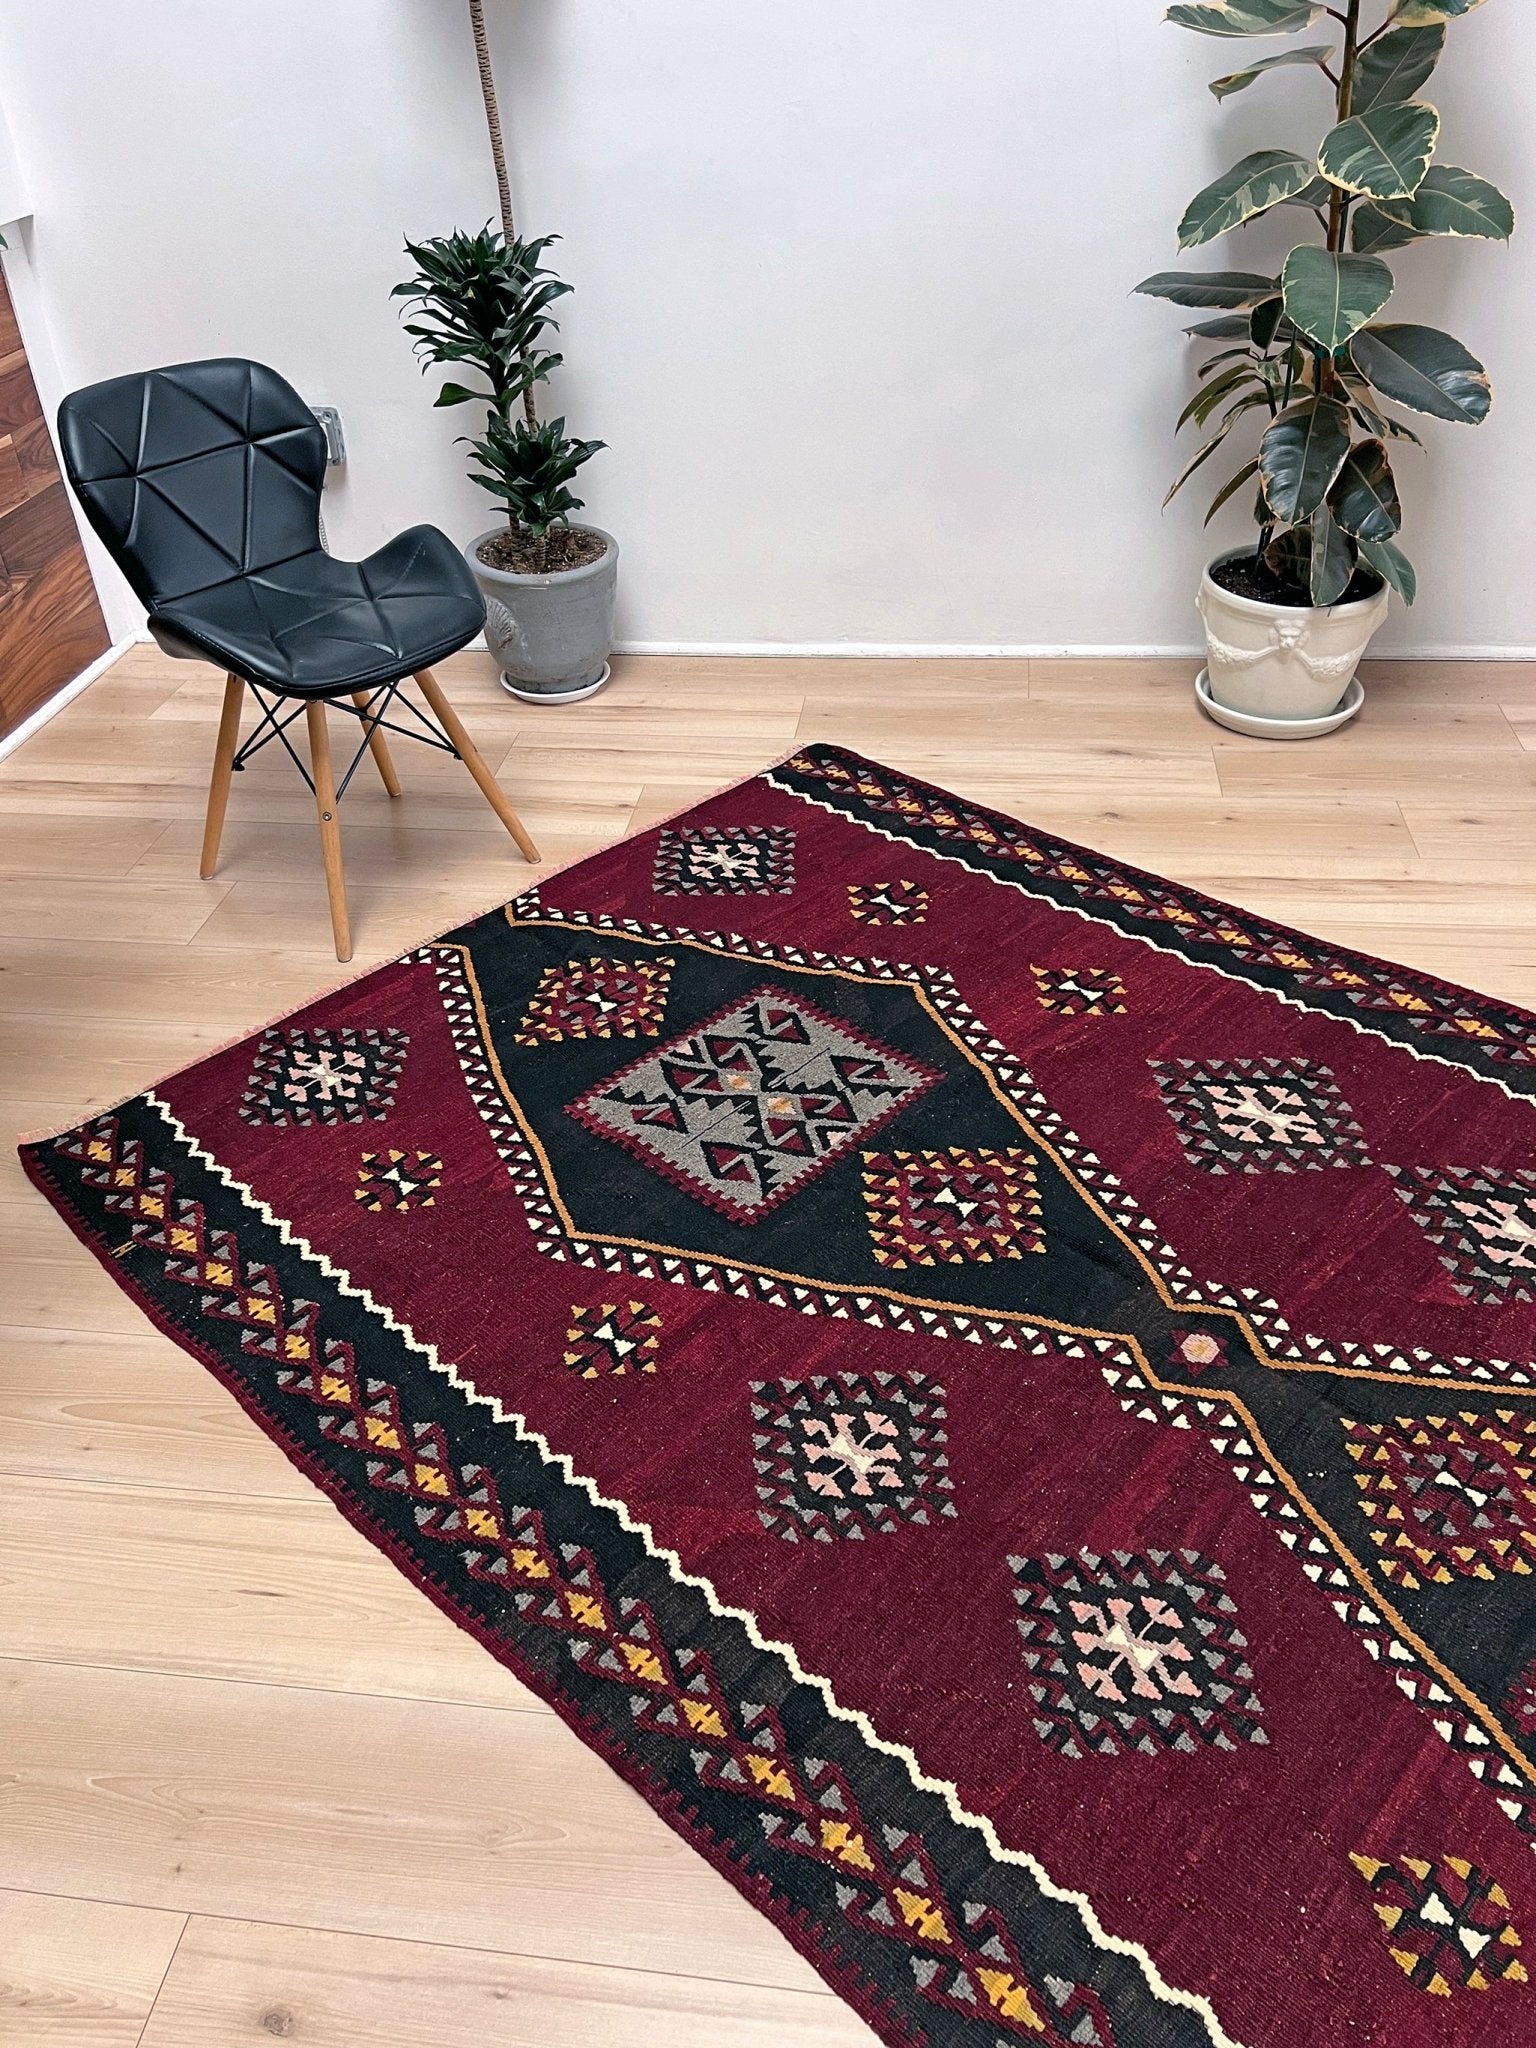 kayseri vintage turkish rug shop Sf Bay Area. Buy handmade wool flatweave rug store california. Vibrant color warm color rug in living room setting. 